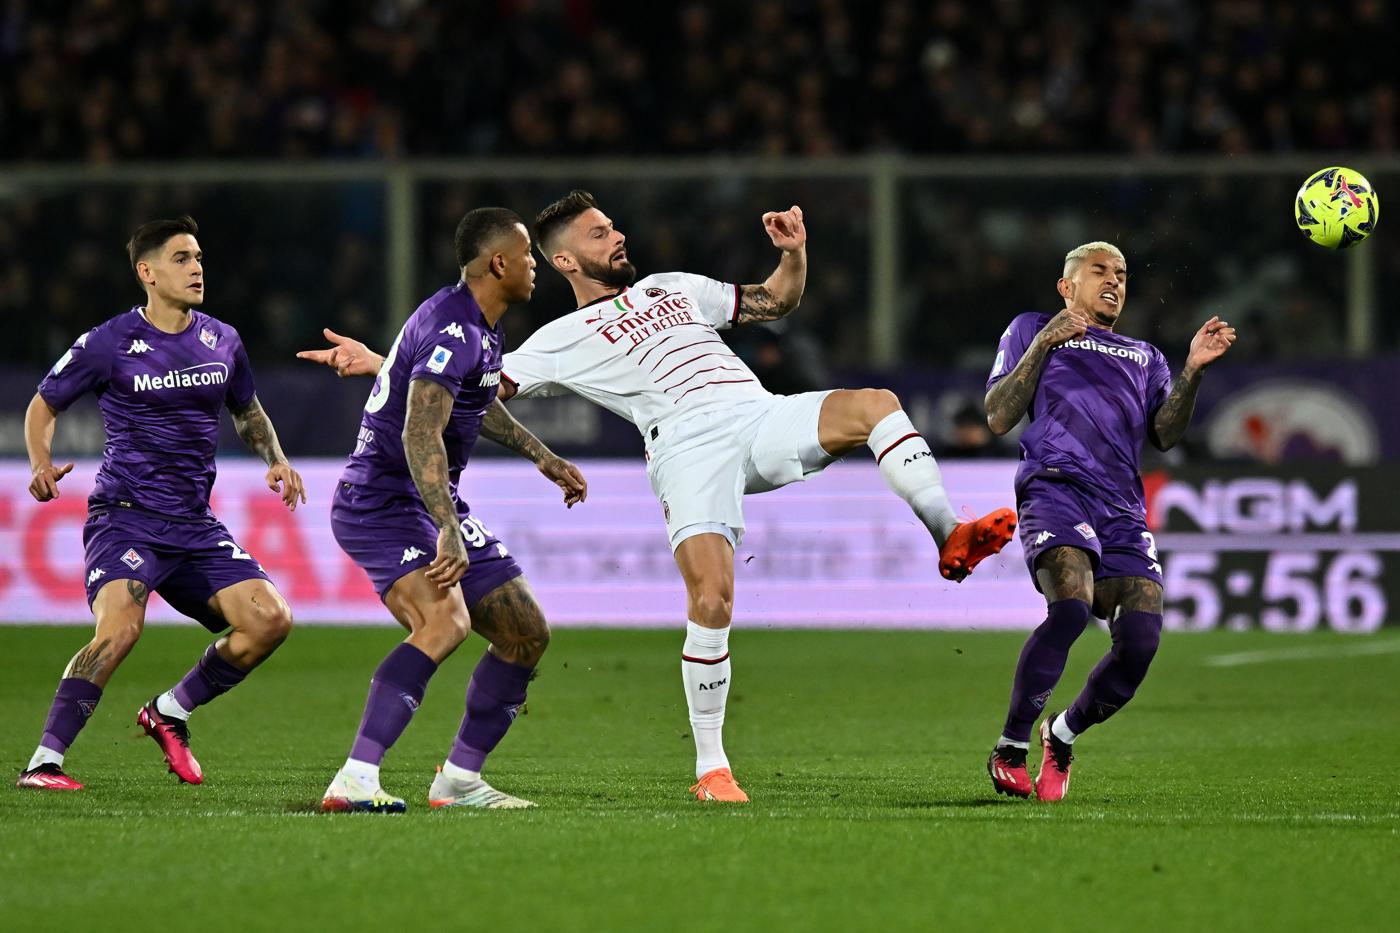 Fiorentina vs Milan - 2-1. Italian Championship, 25th round. Match Review, Statistics